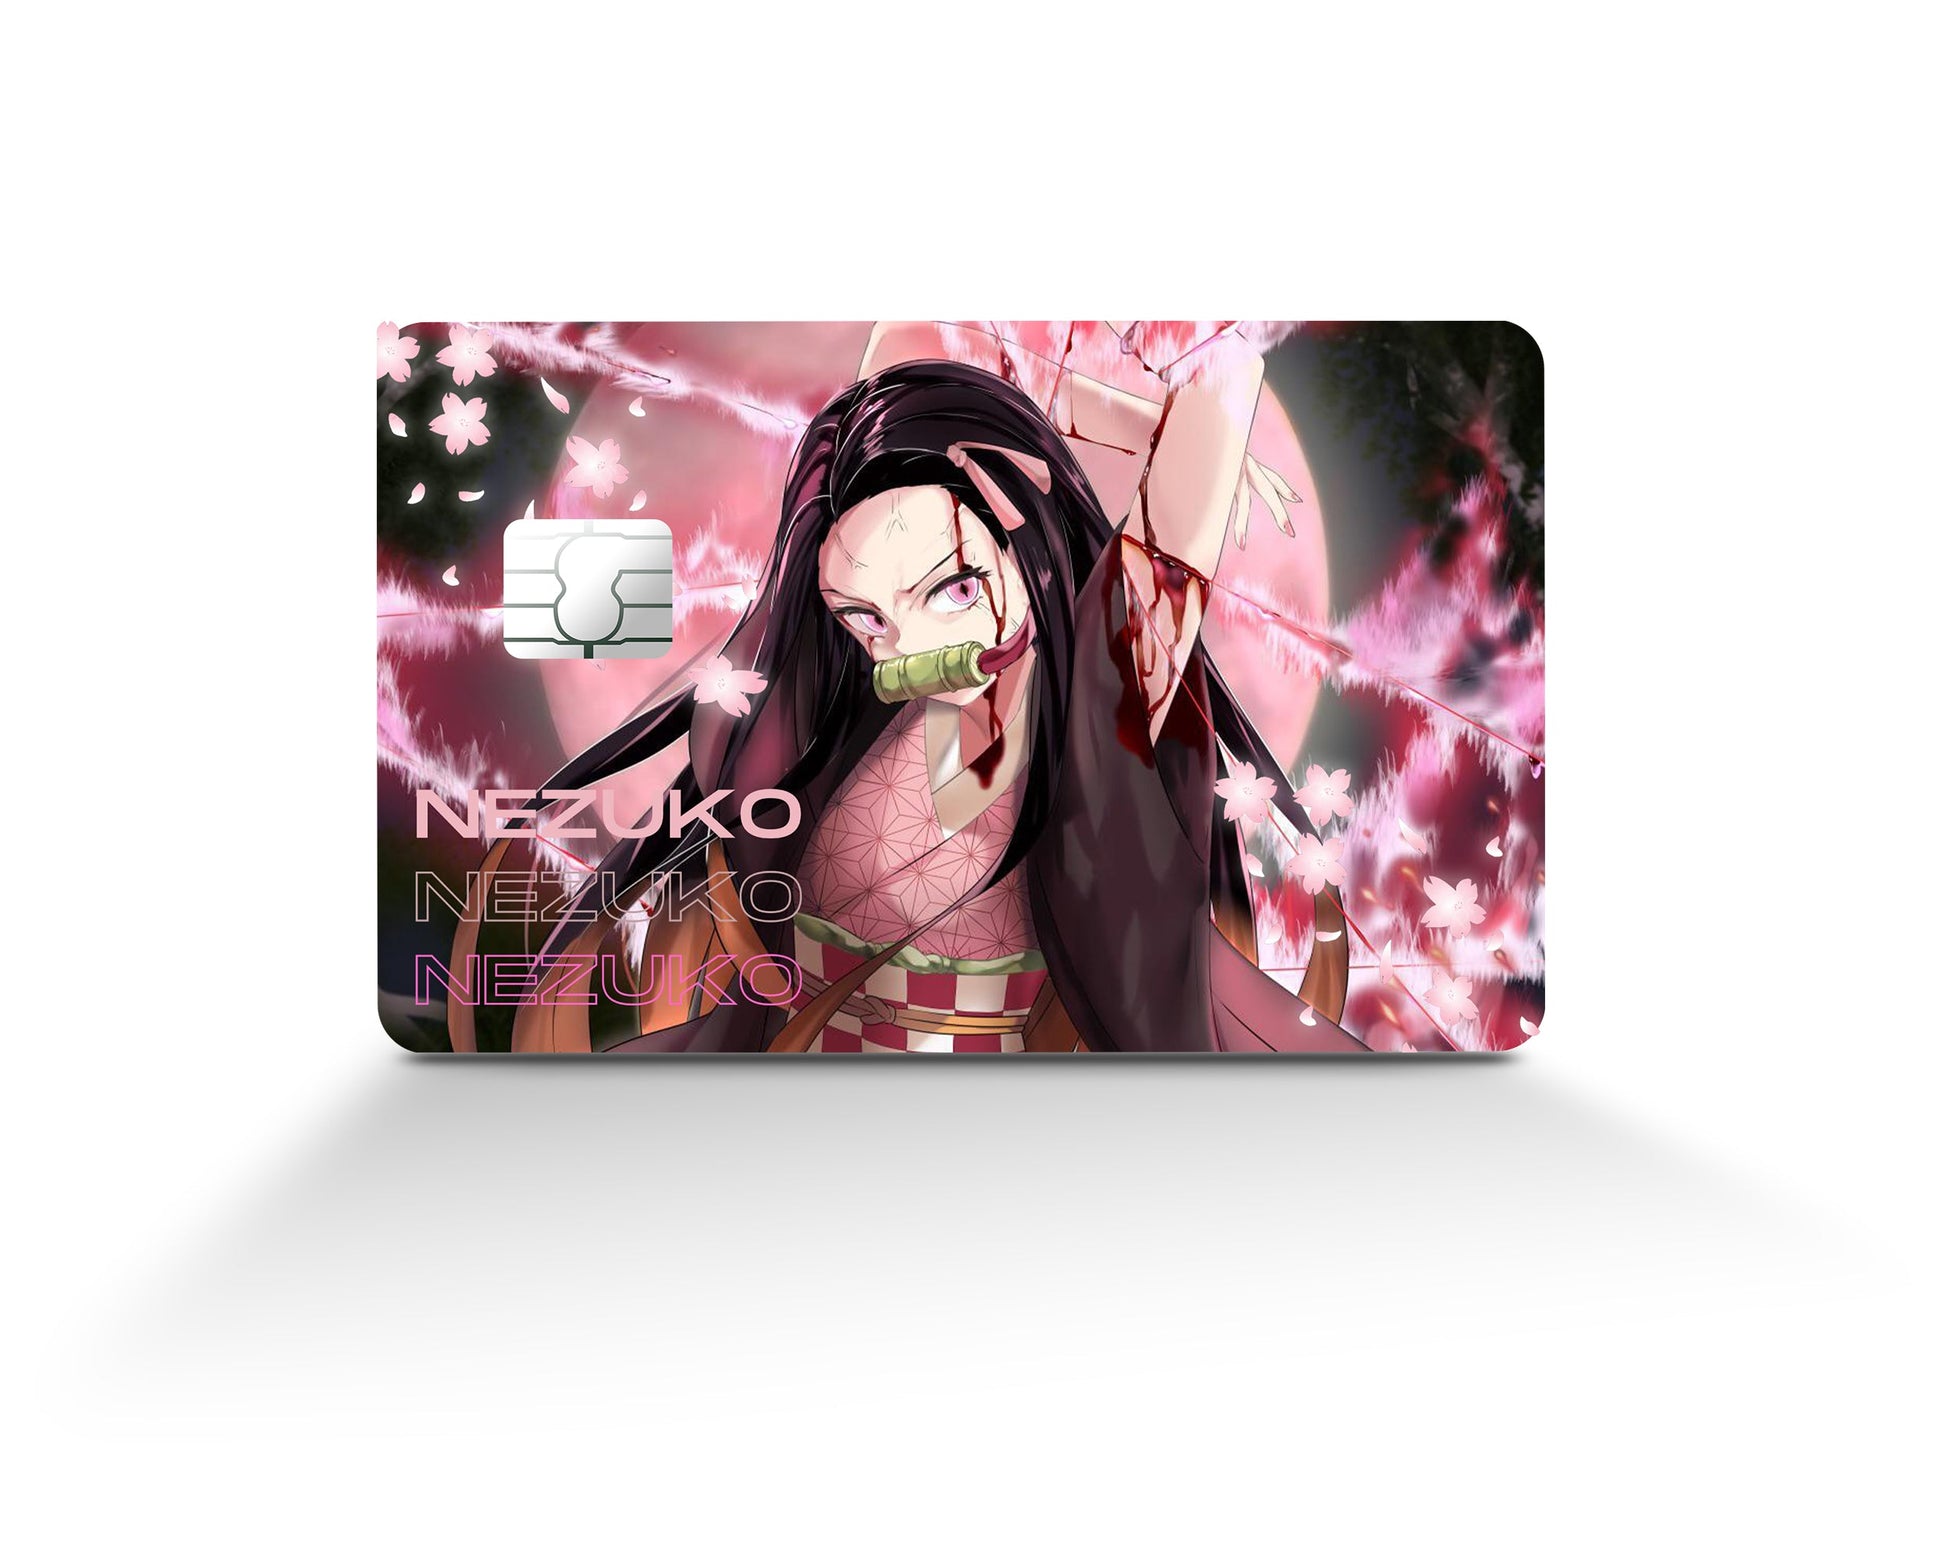 Demon Anime Credit Card Skin Slayer Anime Credit Card 